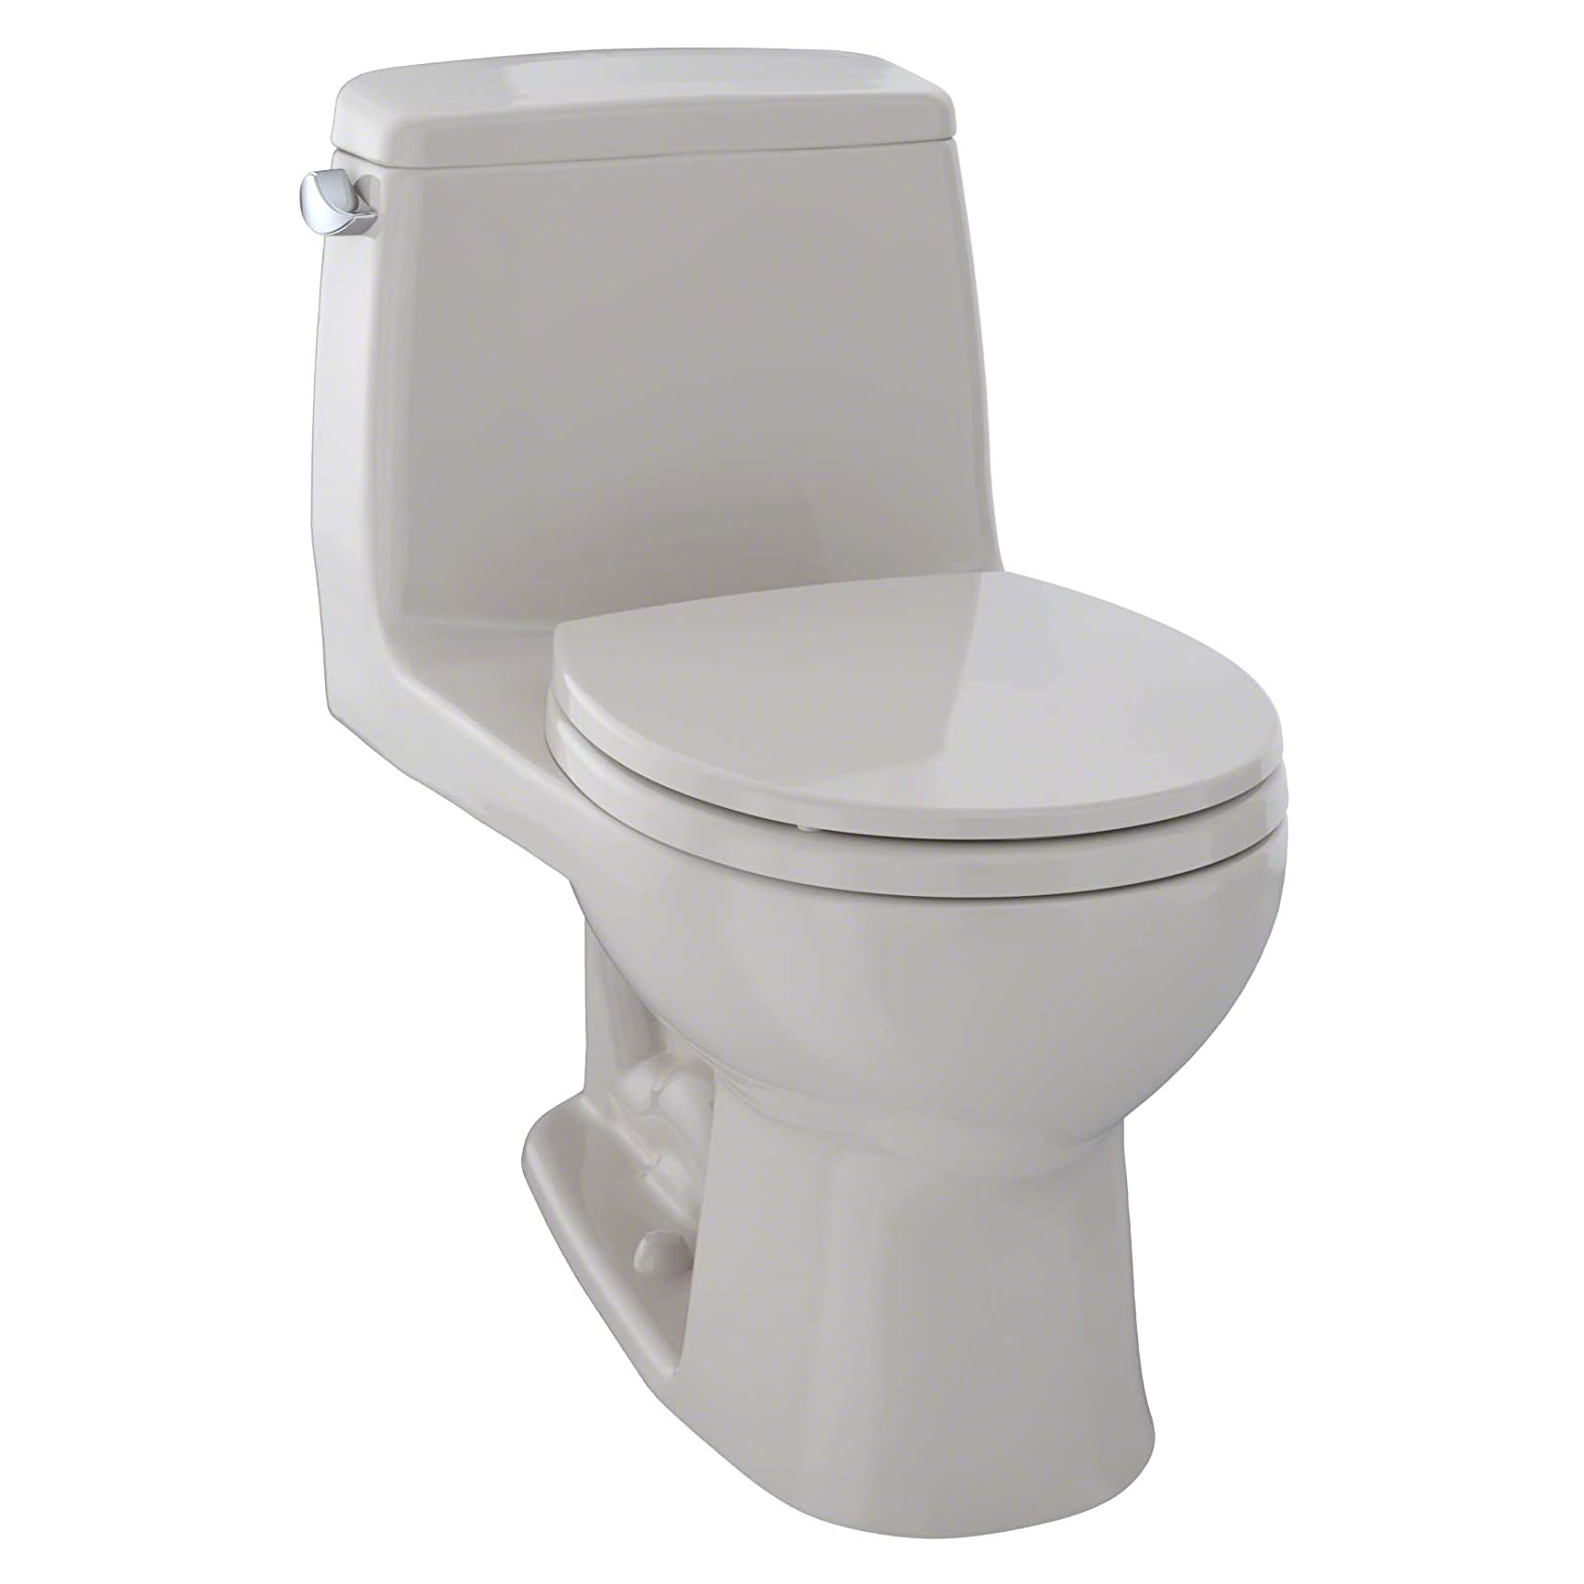 Ultramax 1-pc Round Front Toilet w/Seat in Sedona Beige 1.6 gpf